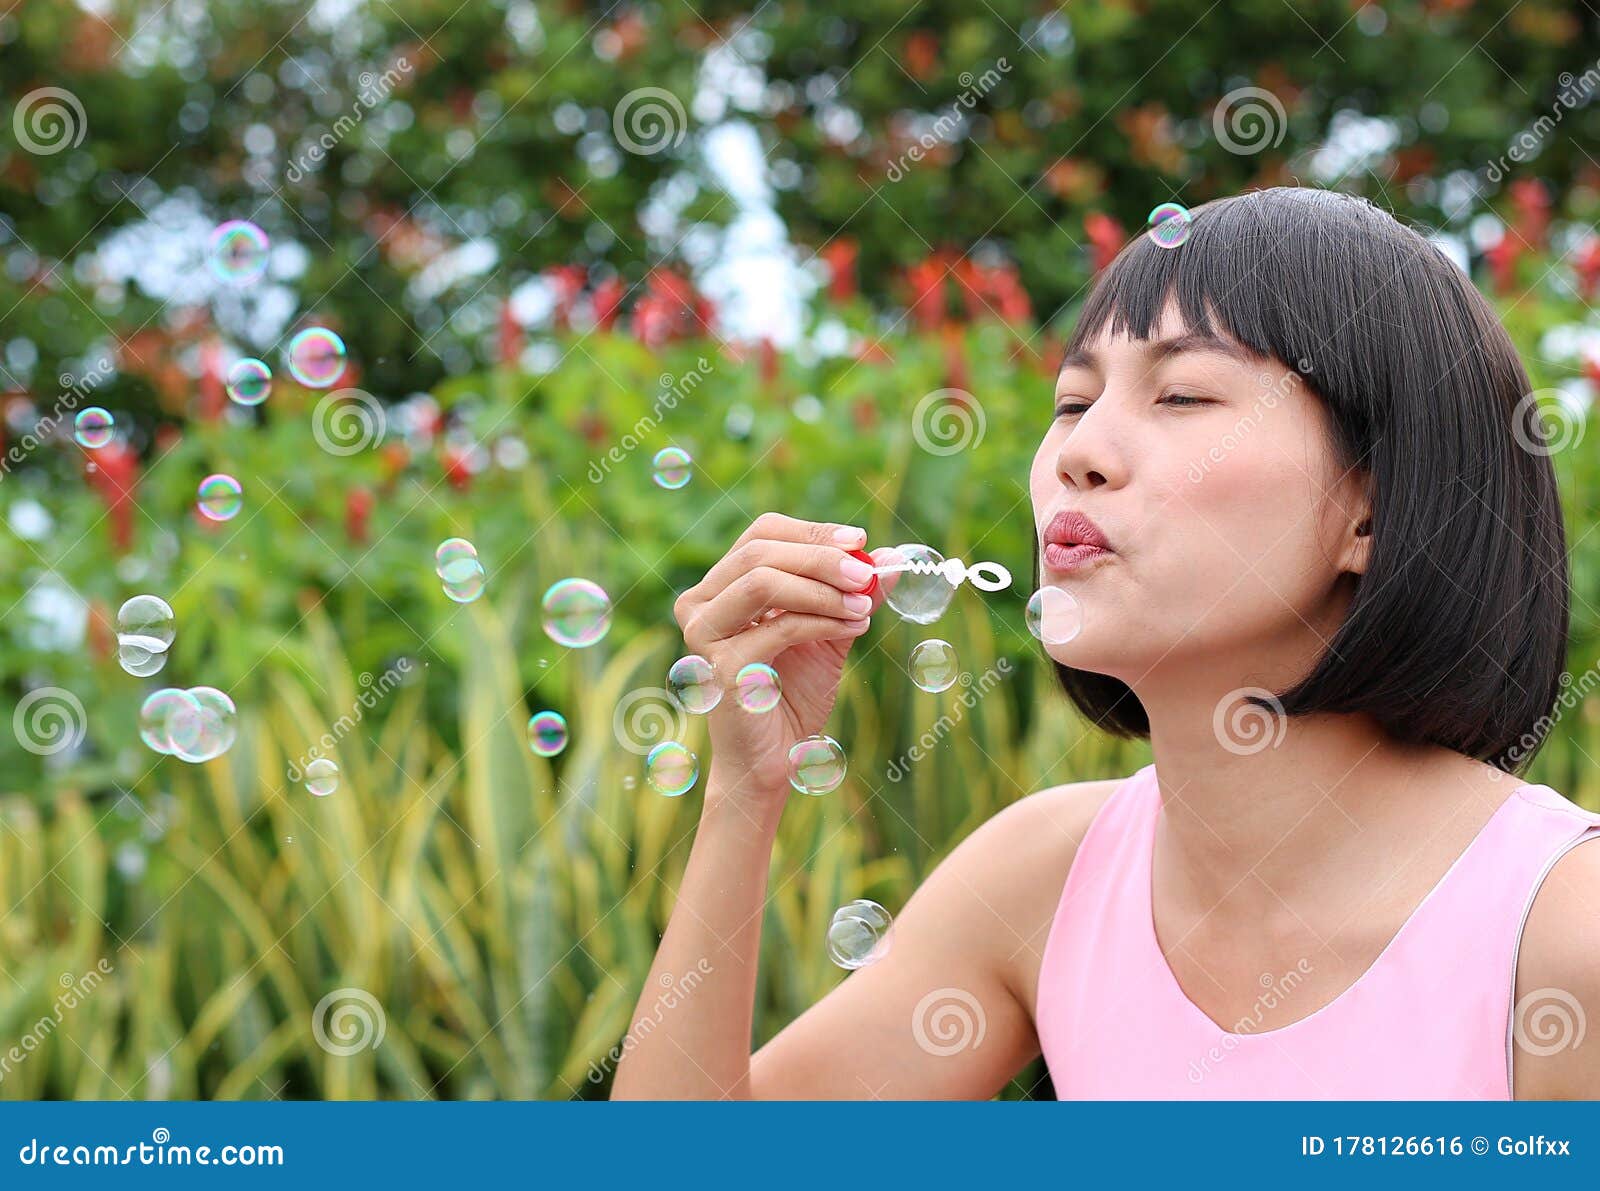 Bubble outdoor woman asian